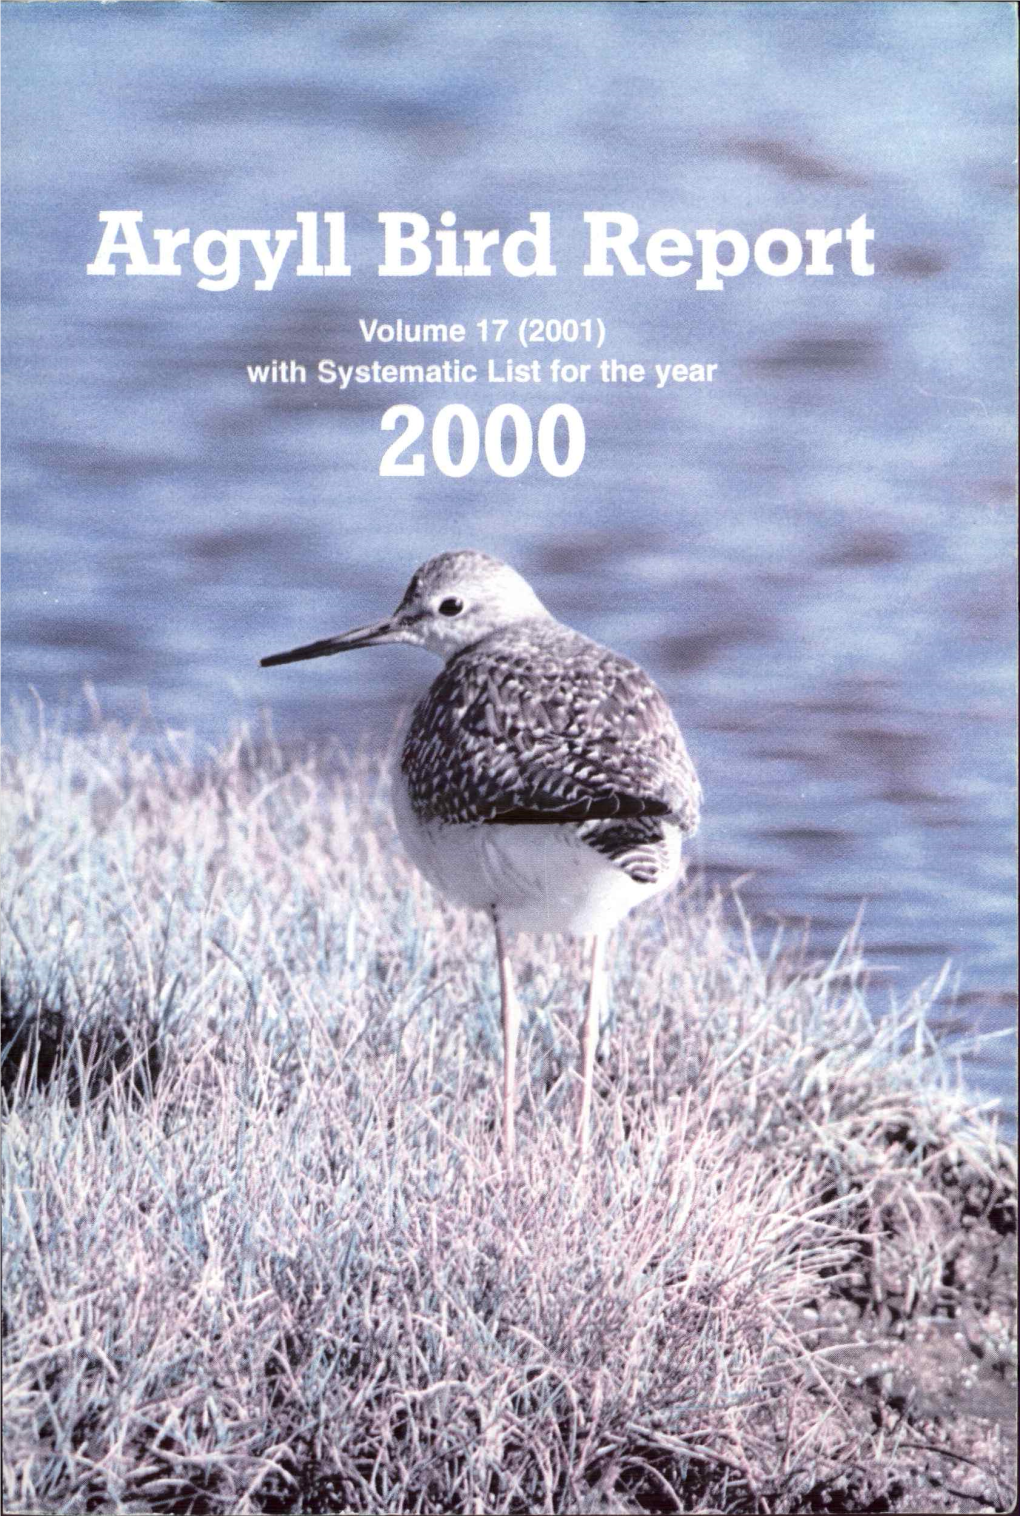 Argyll Bird Report 17 2000